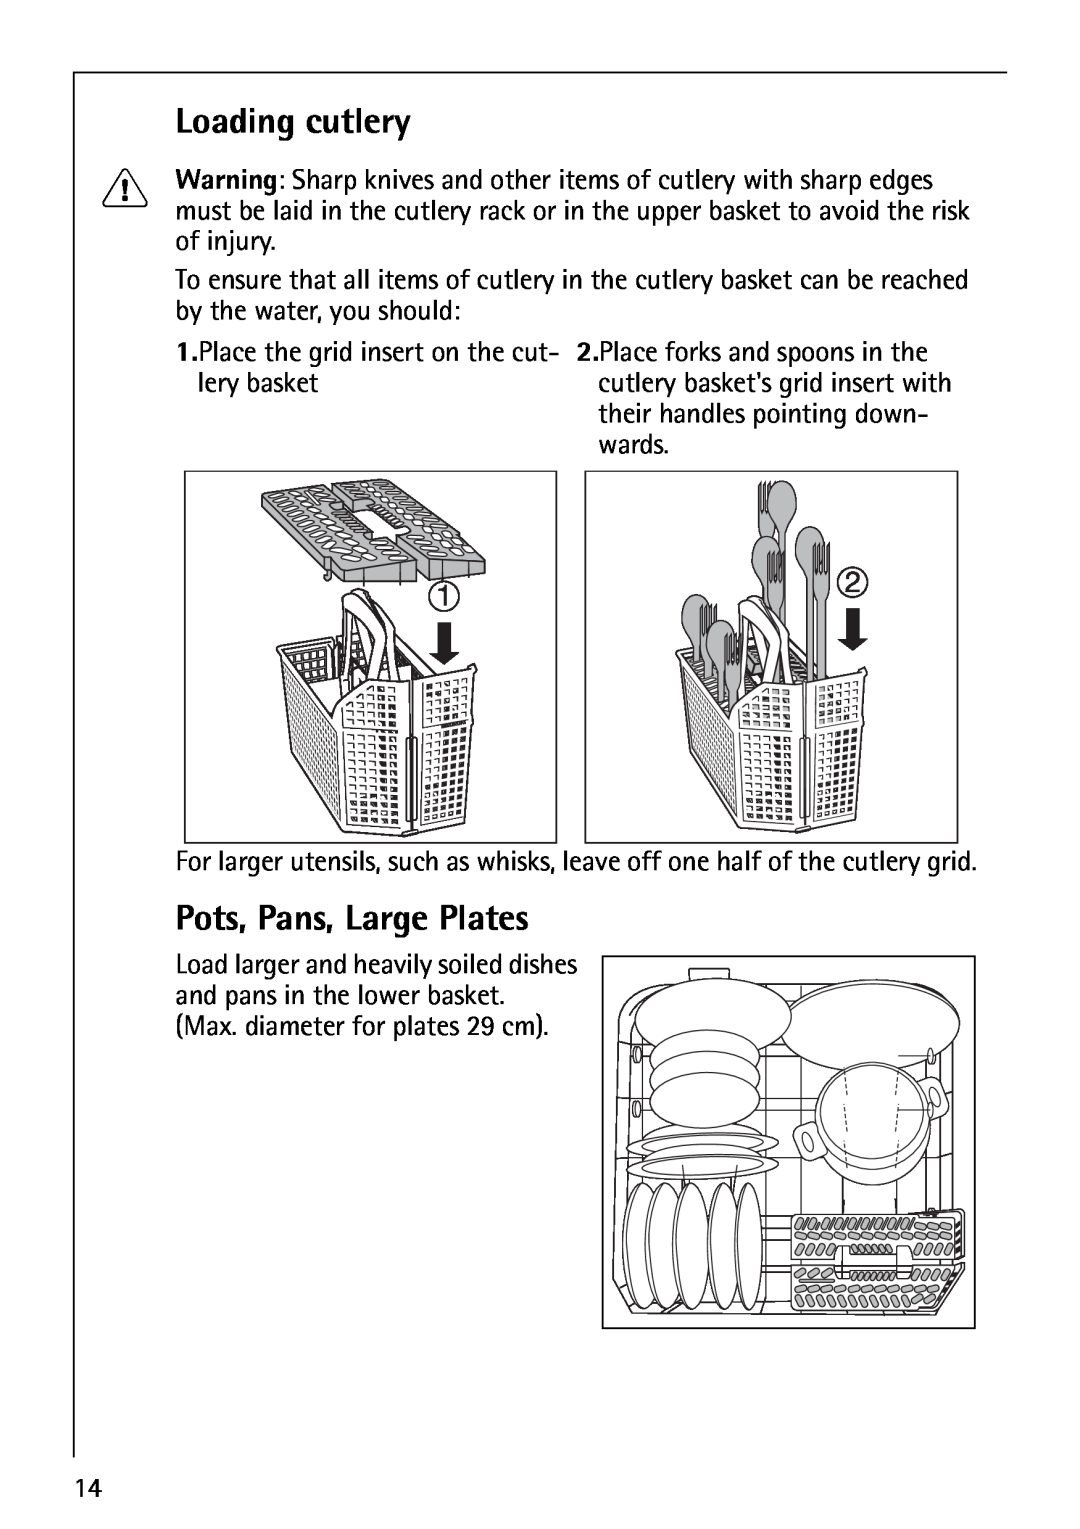 AEG 40660 manual Loading cutlery, Pots, Pans, Large Plates 